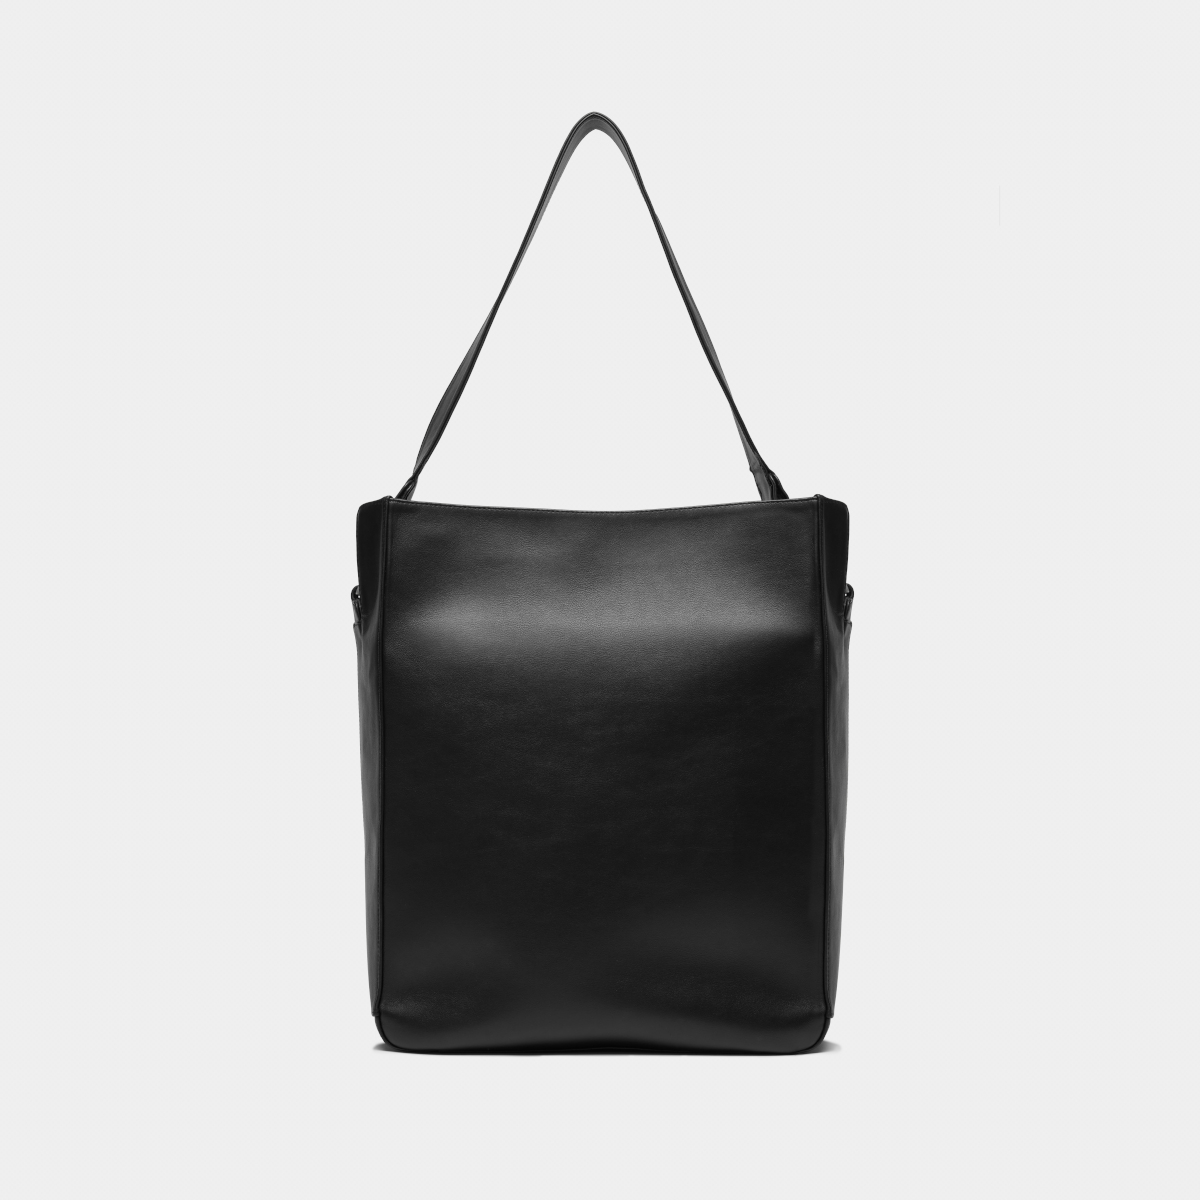 D03 leather bag